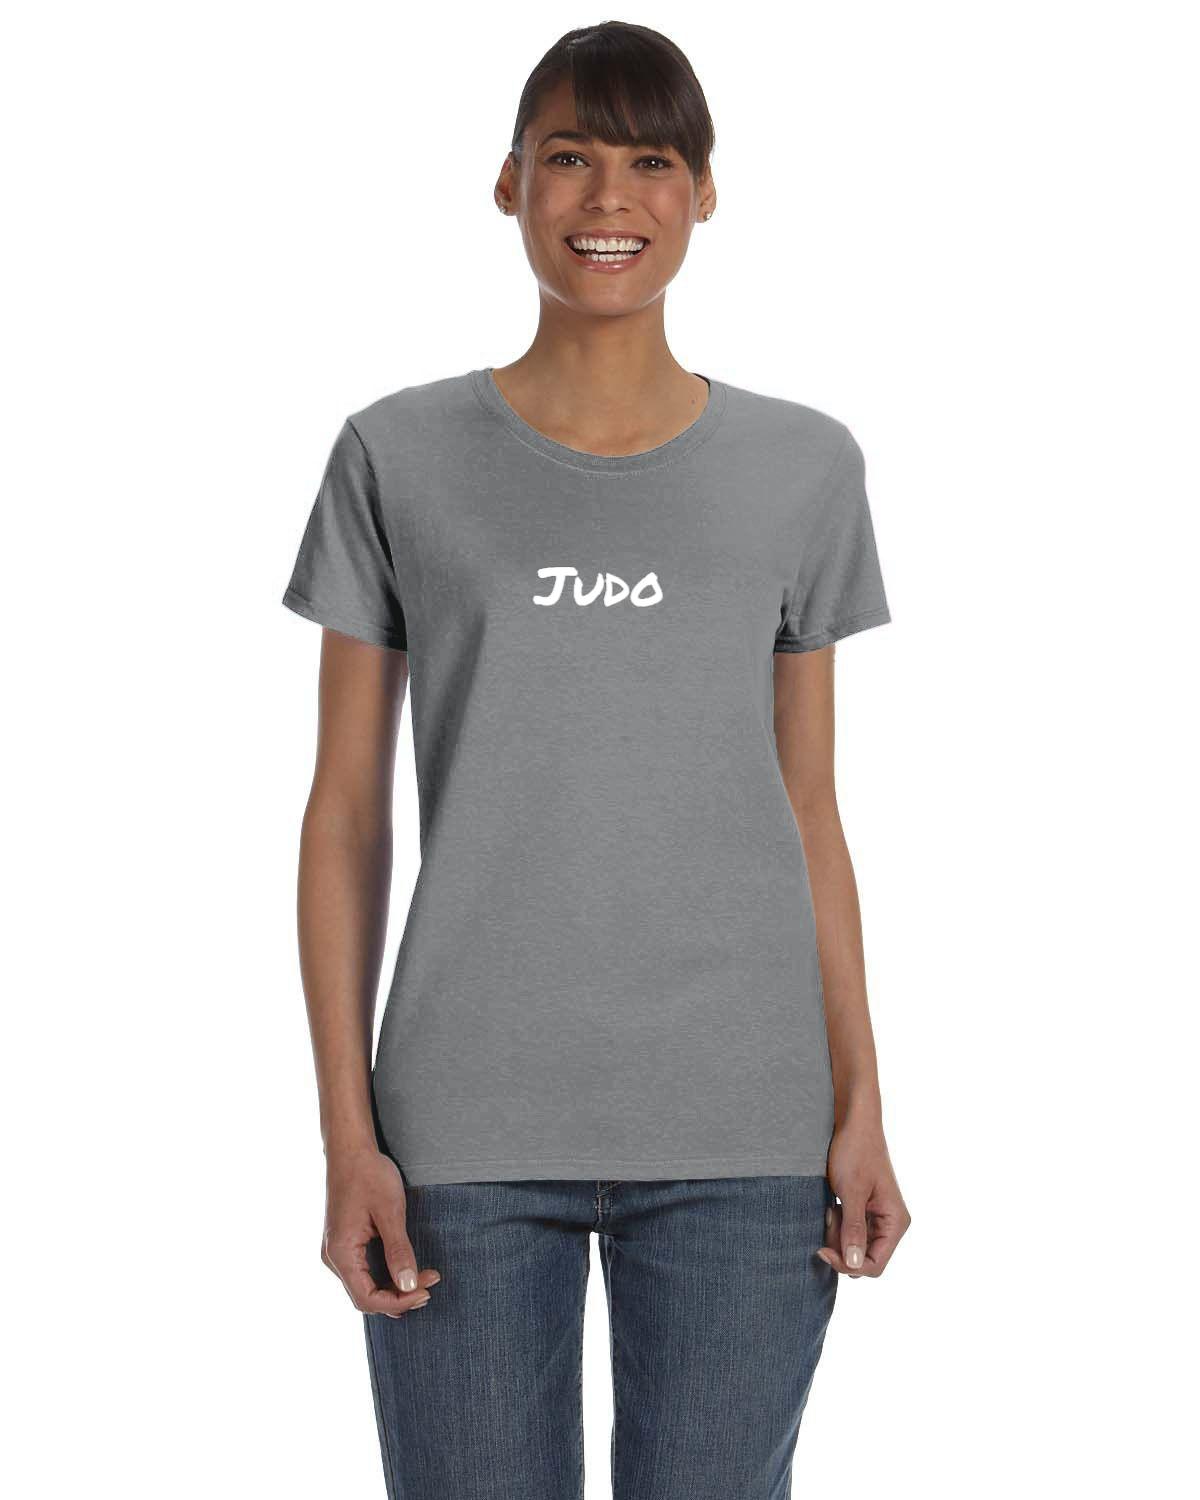 Judo Womens T-Shirt